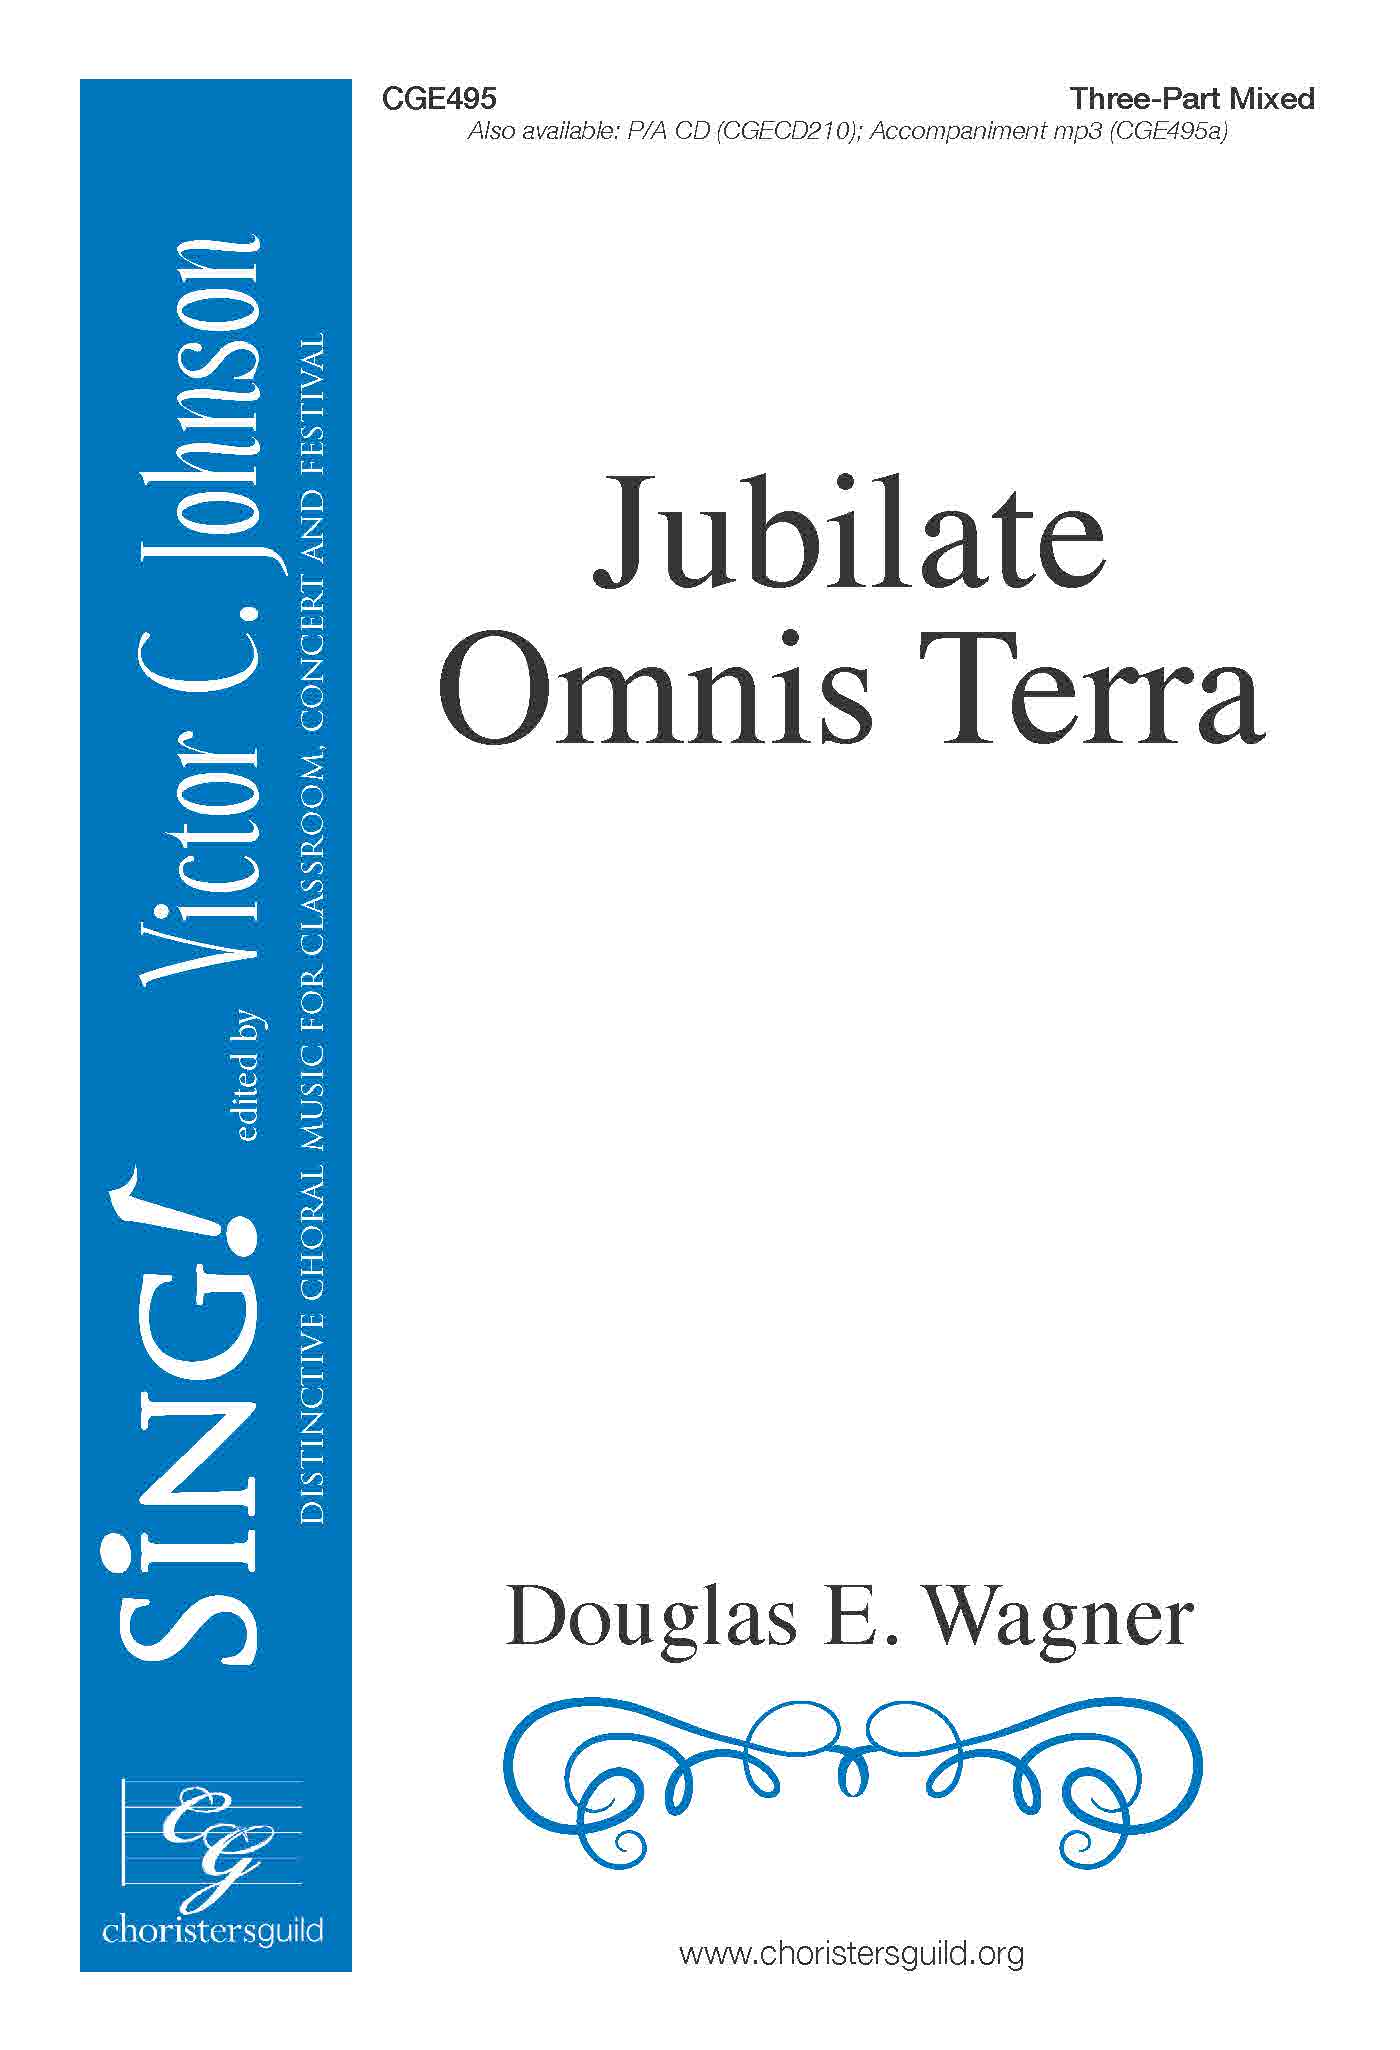 Jubilate Omnis Terra - Three-part Mixed